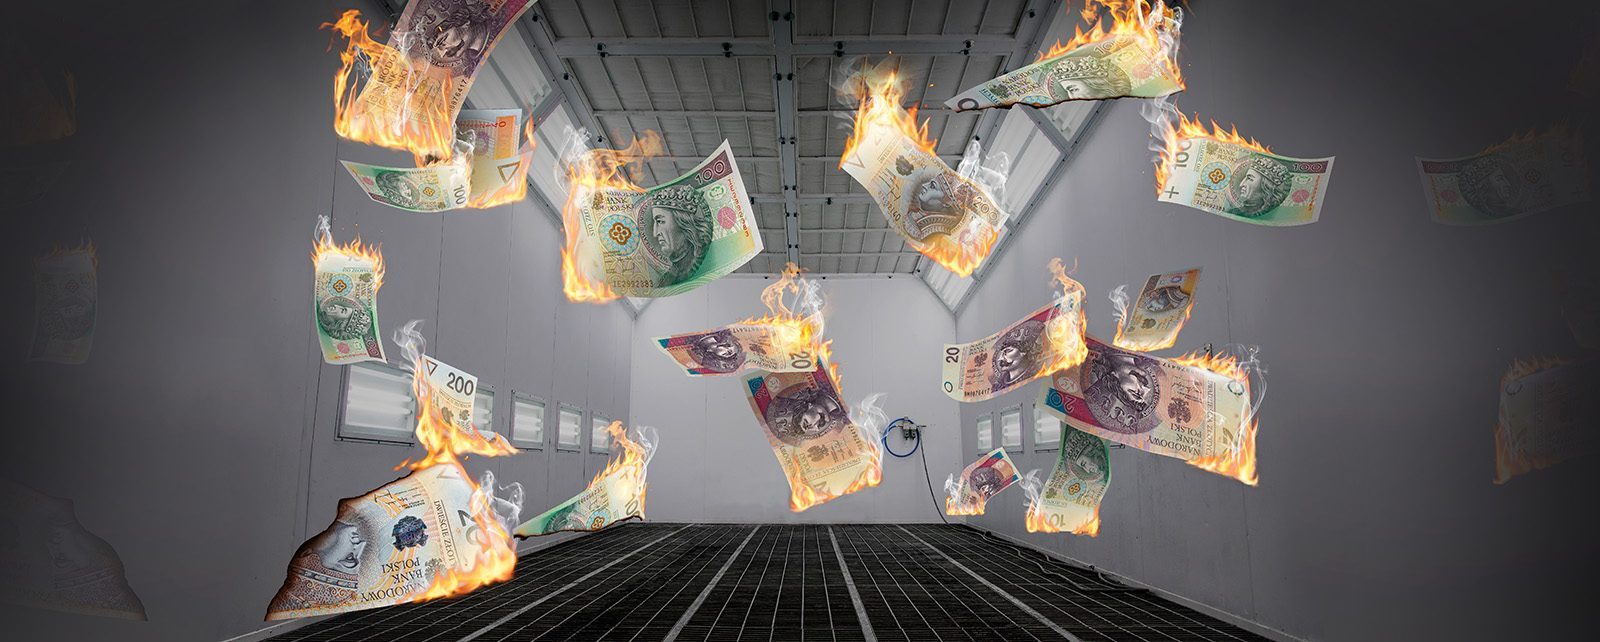 Energy Saving - Burning Zloty